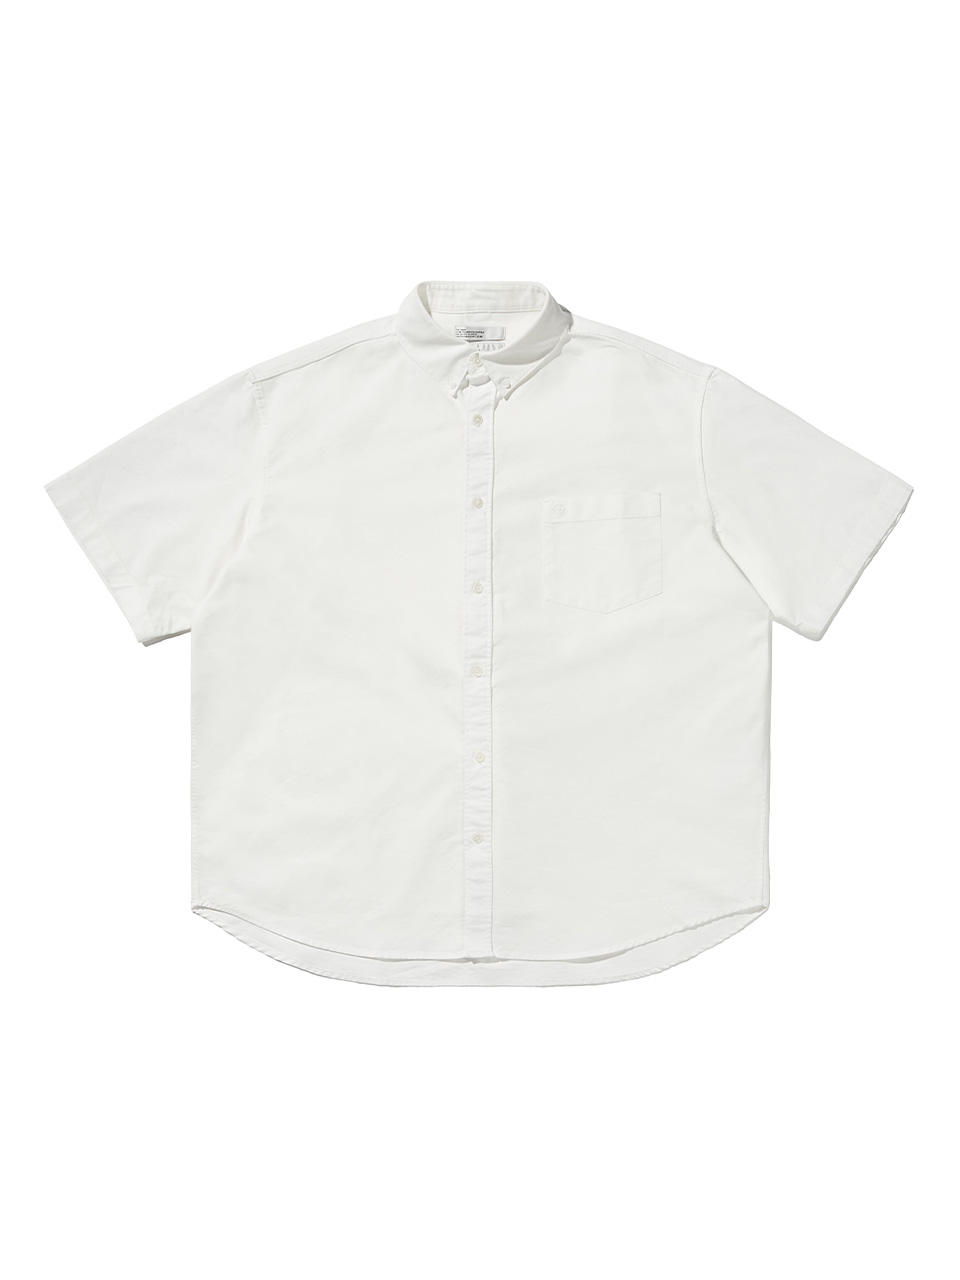 SOUNDSLIFE - [Airocool] Back Loop Short Slevve Oxford Shirt White